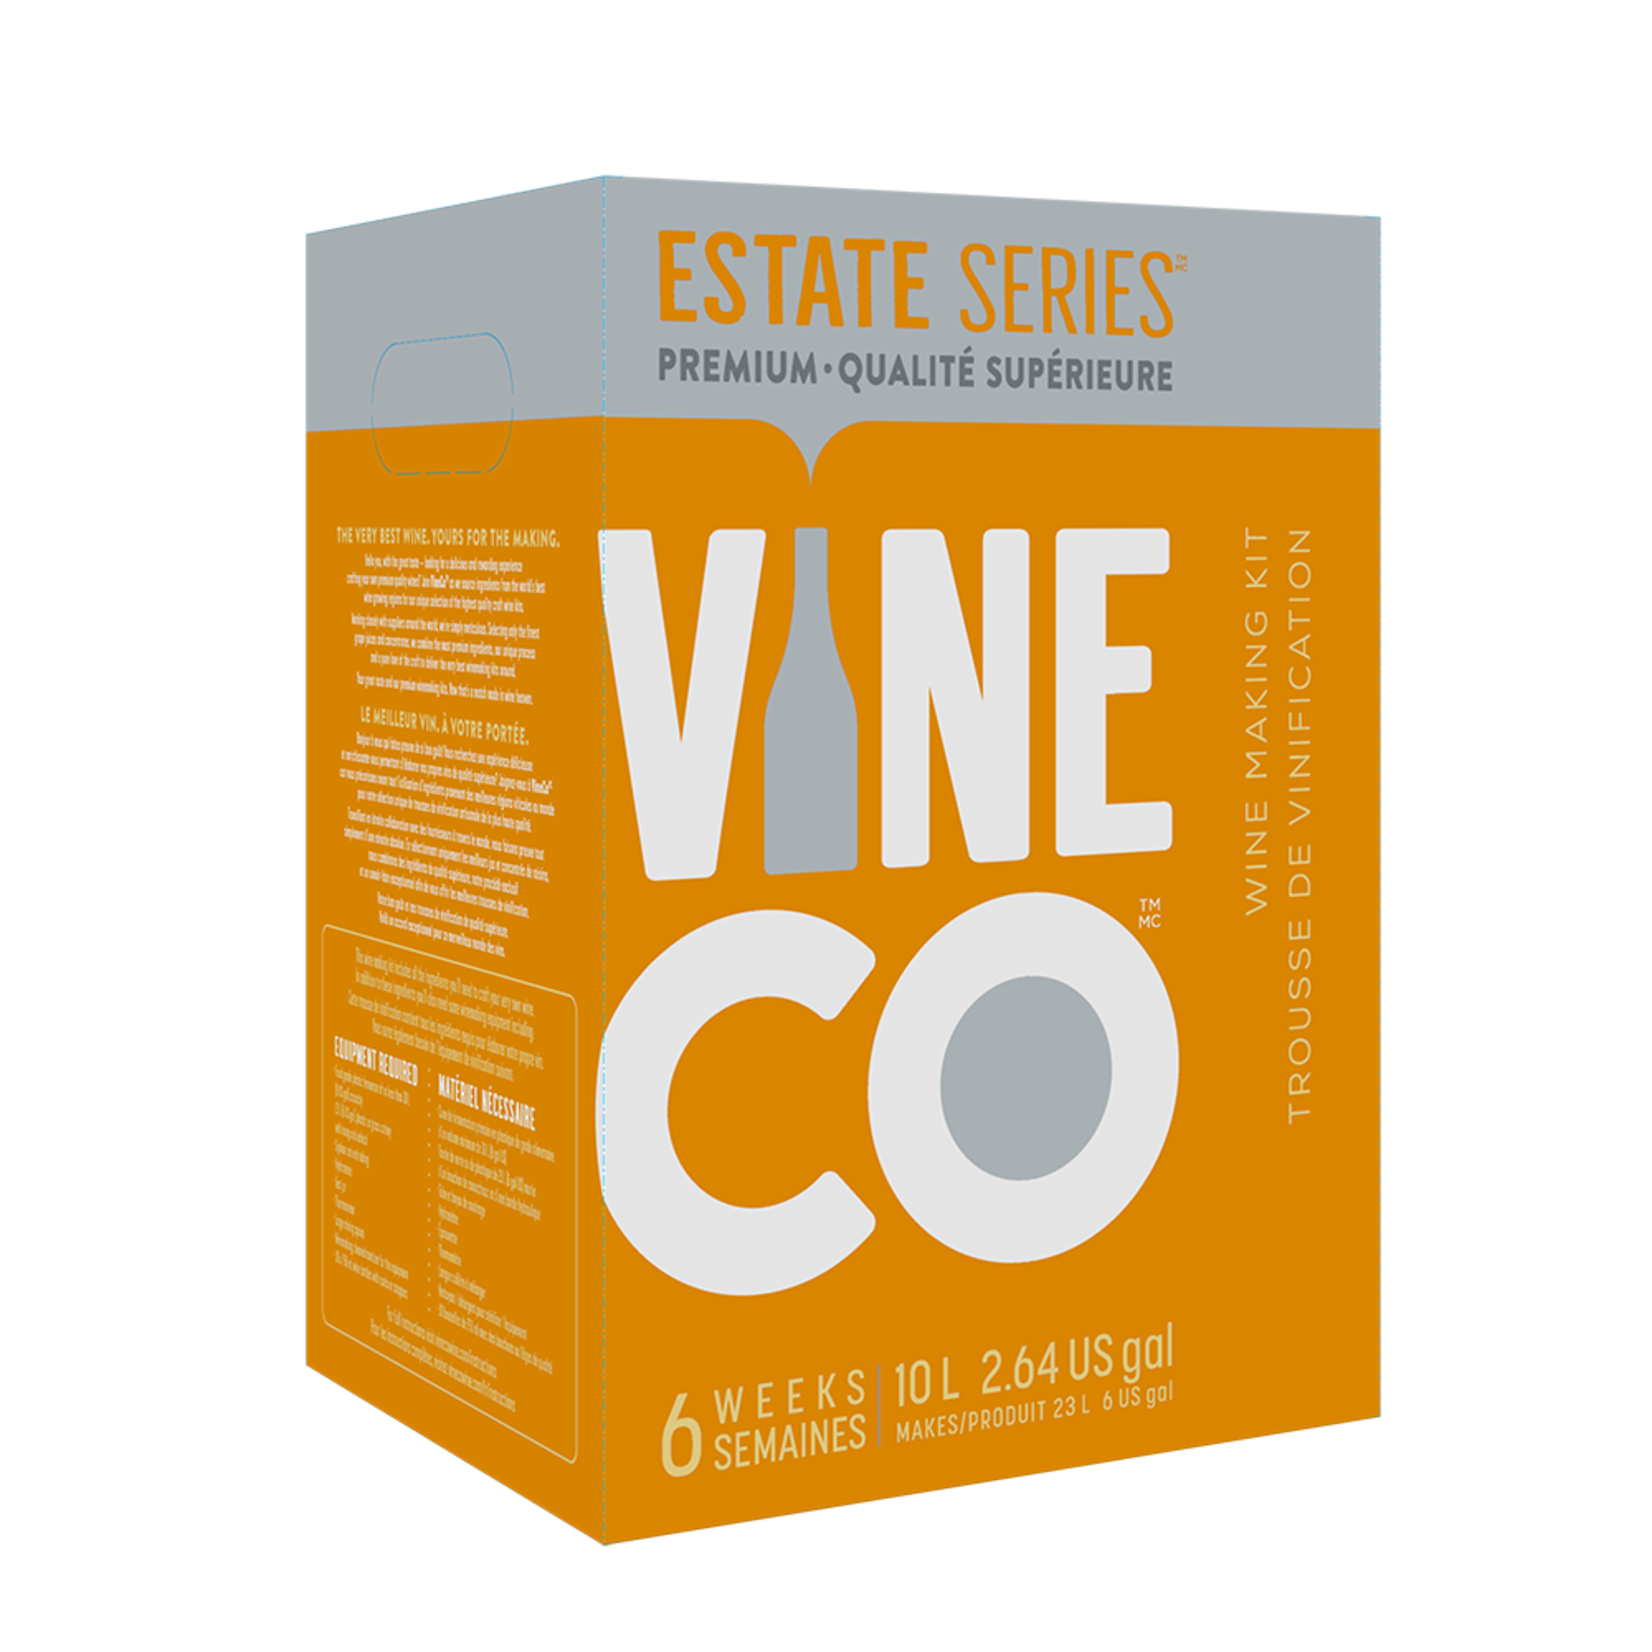 Vine Co. Estate Series Pinot Grigio, ITL